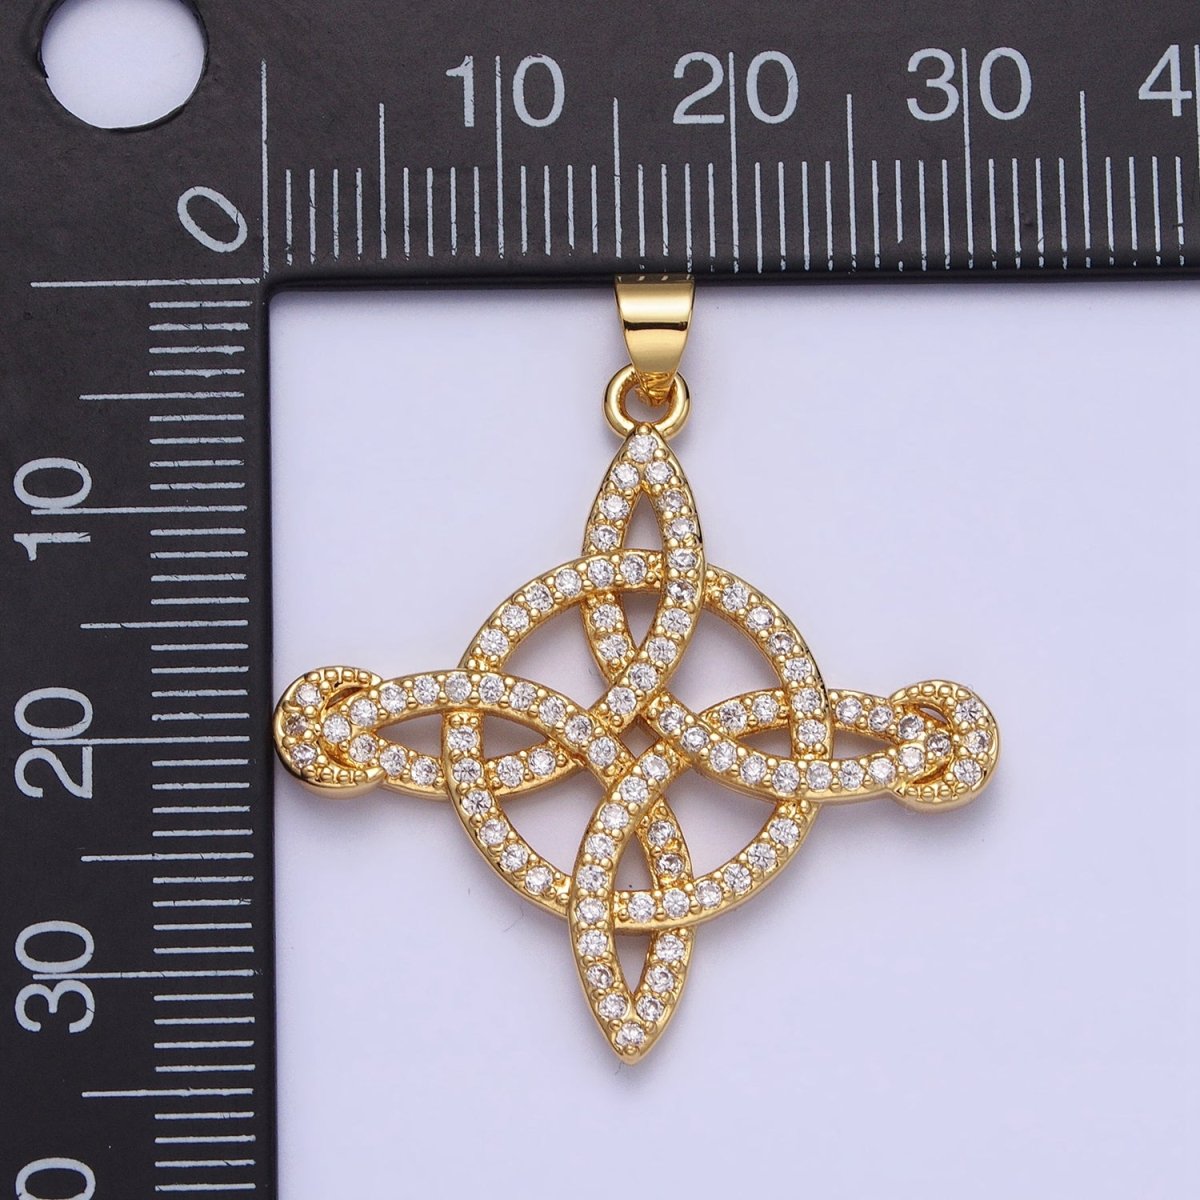 Dainty Gold Celtic Knot Pendant Micro Pave Cz Infinity Cross Charm Eternal Knot Charm AA-143 - DLUXCA